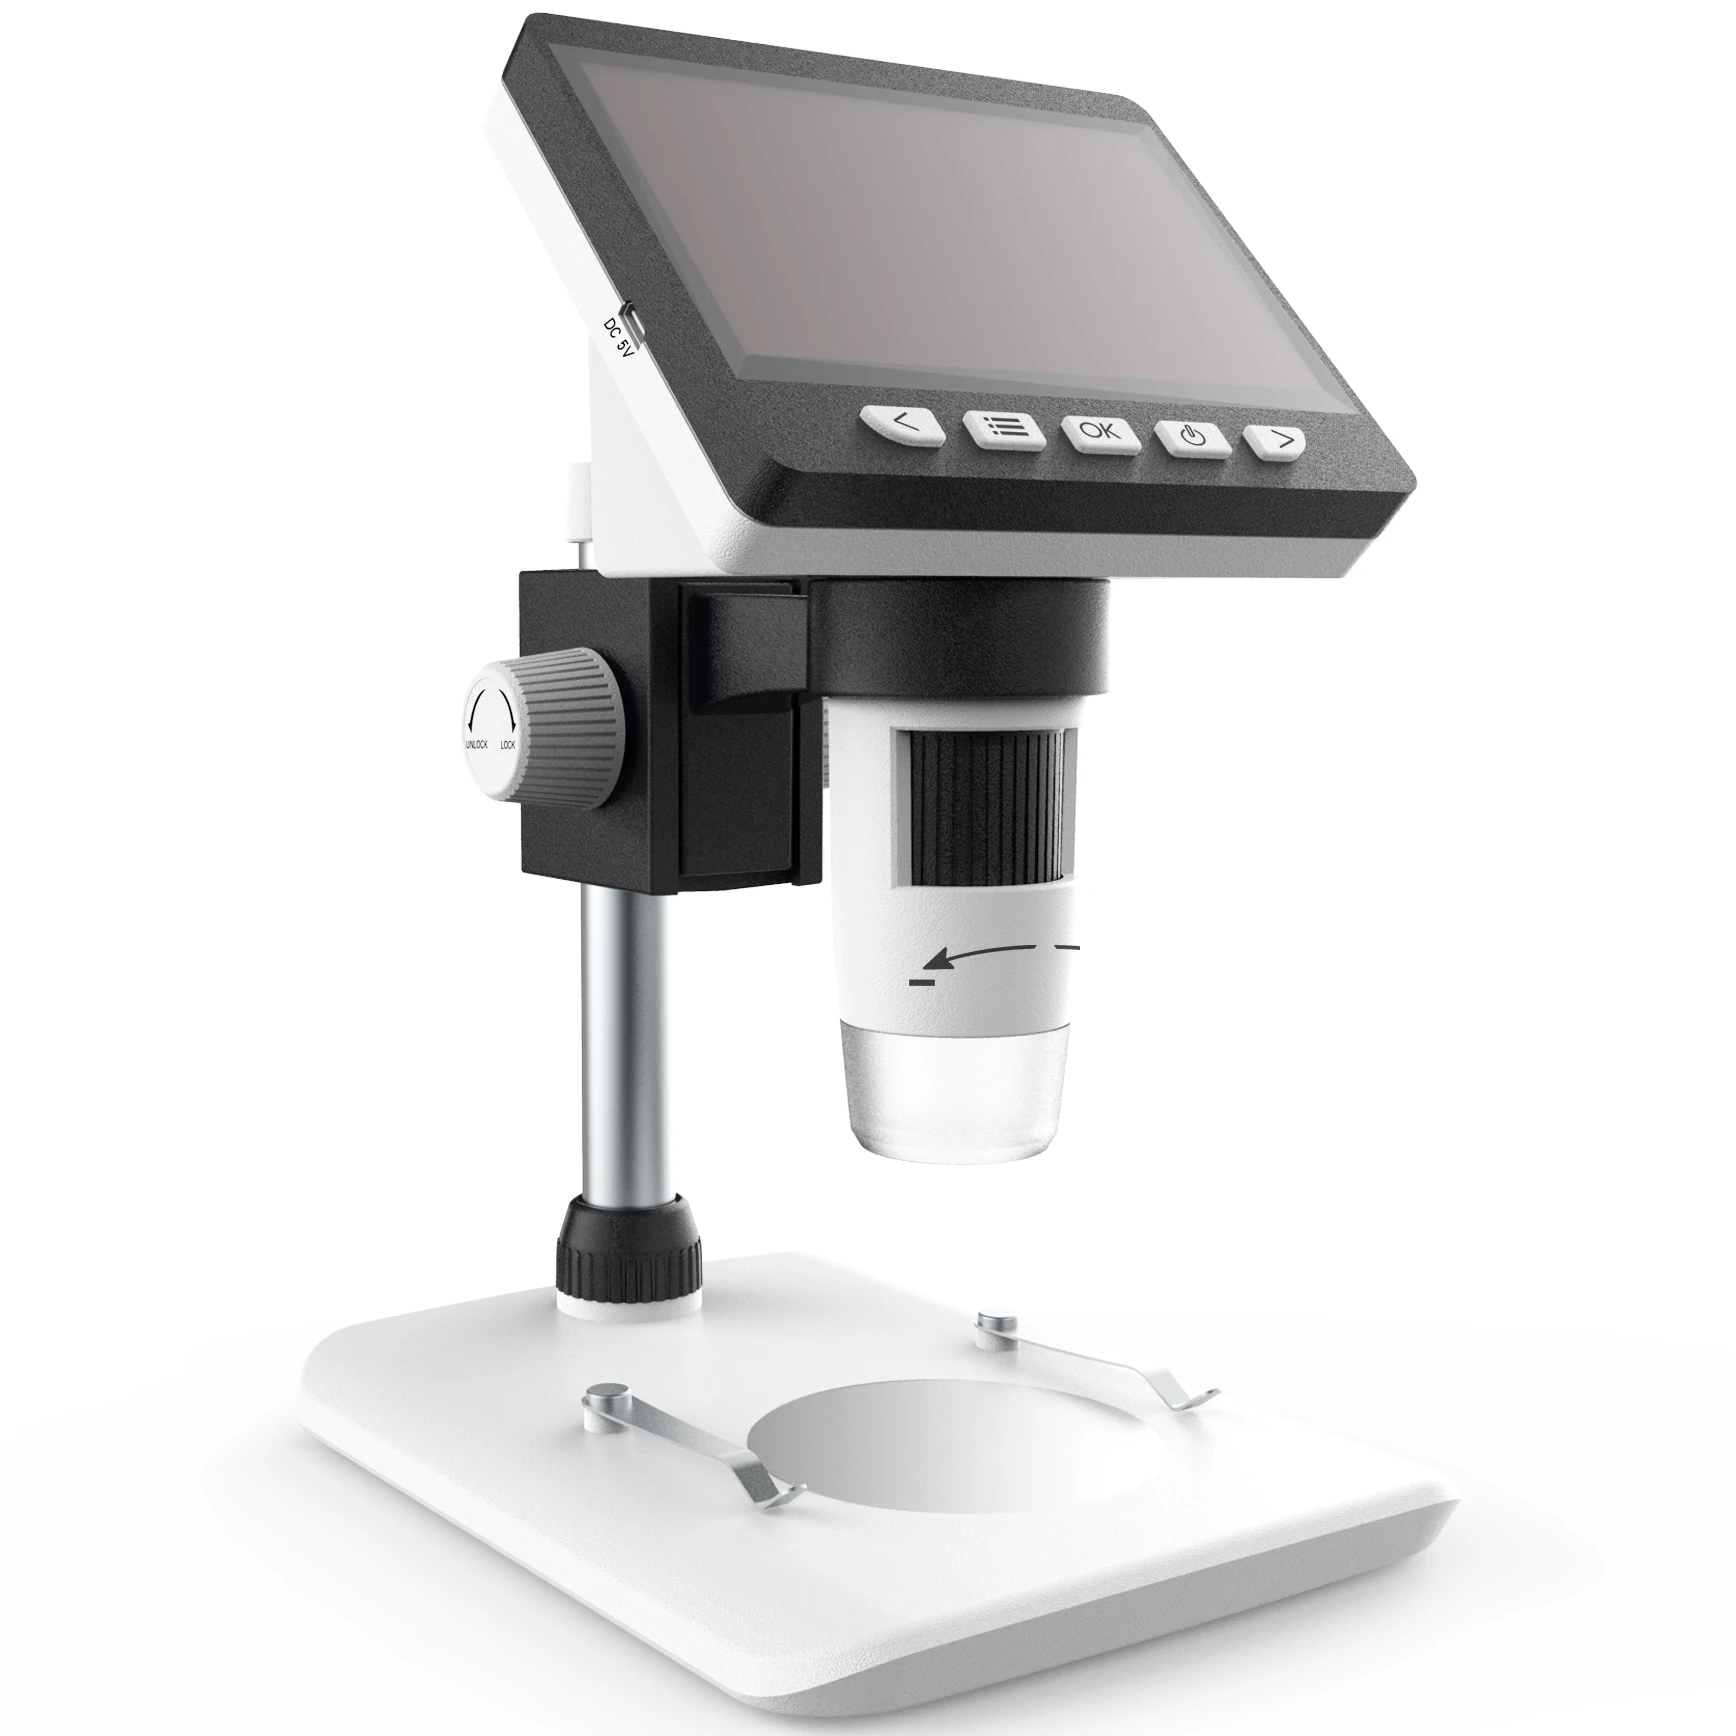 

2MP Pixel Digital Camera Microscopio 1000x Zoom 0-40mm Focusing Range 1080P Digital Magnifying Microscope with 8 LED Lamp